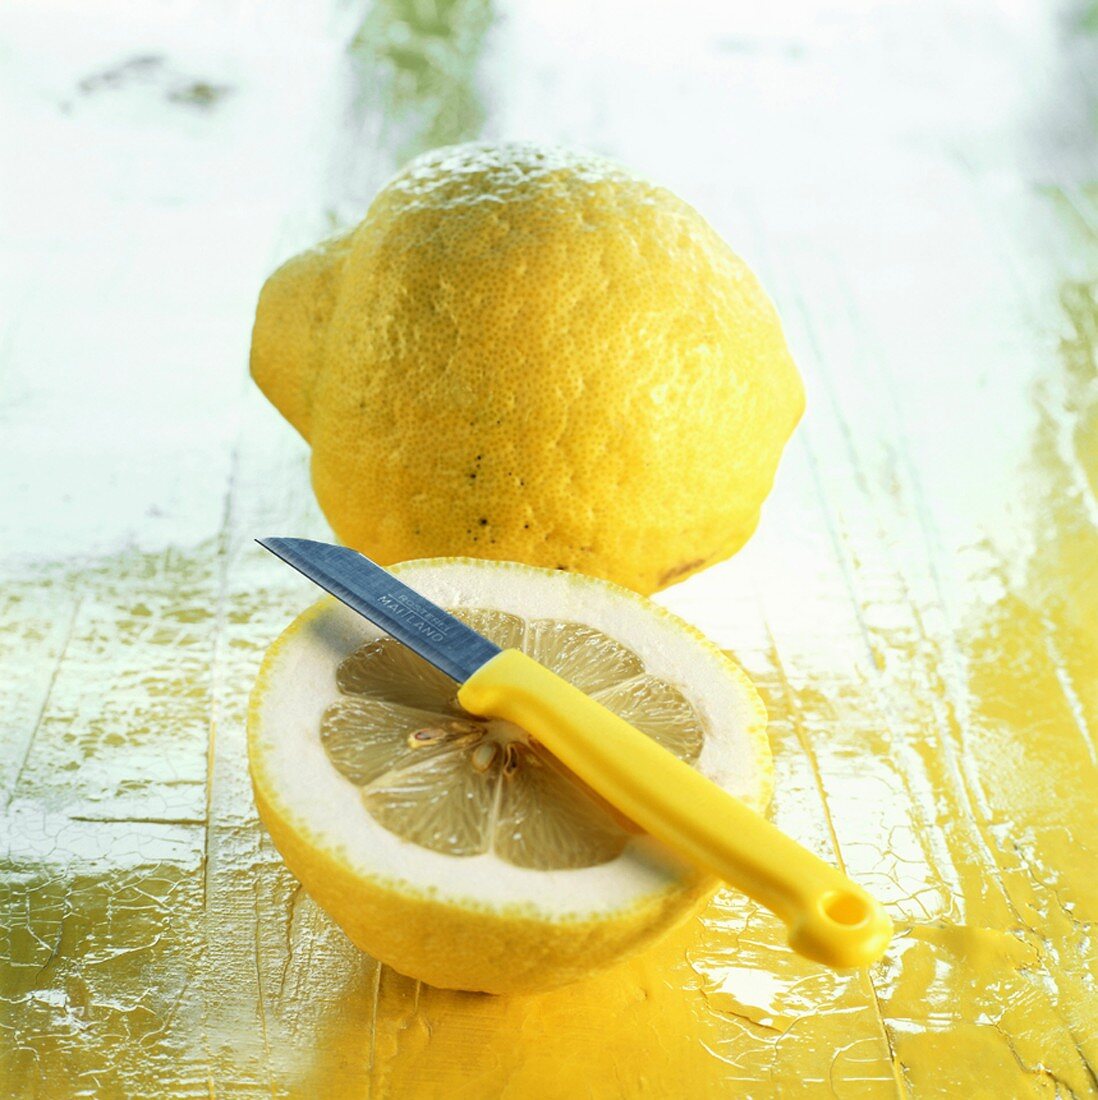 A whole and a half lemon with knife